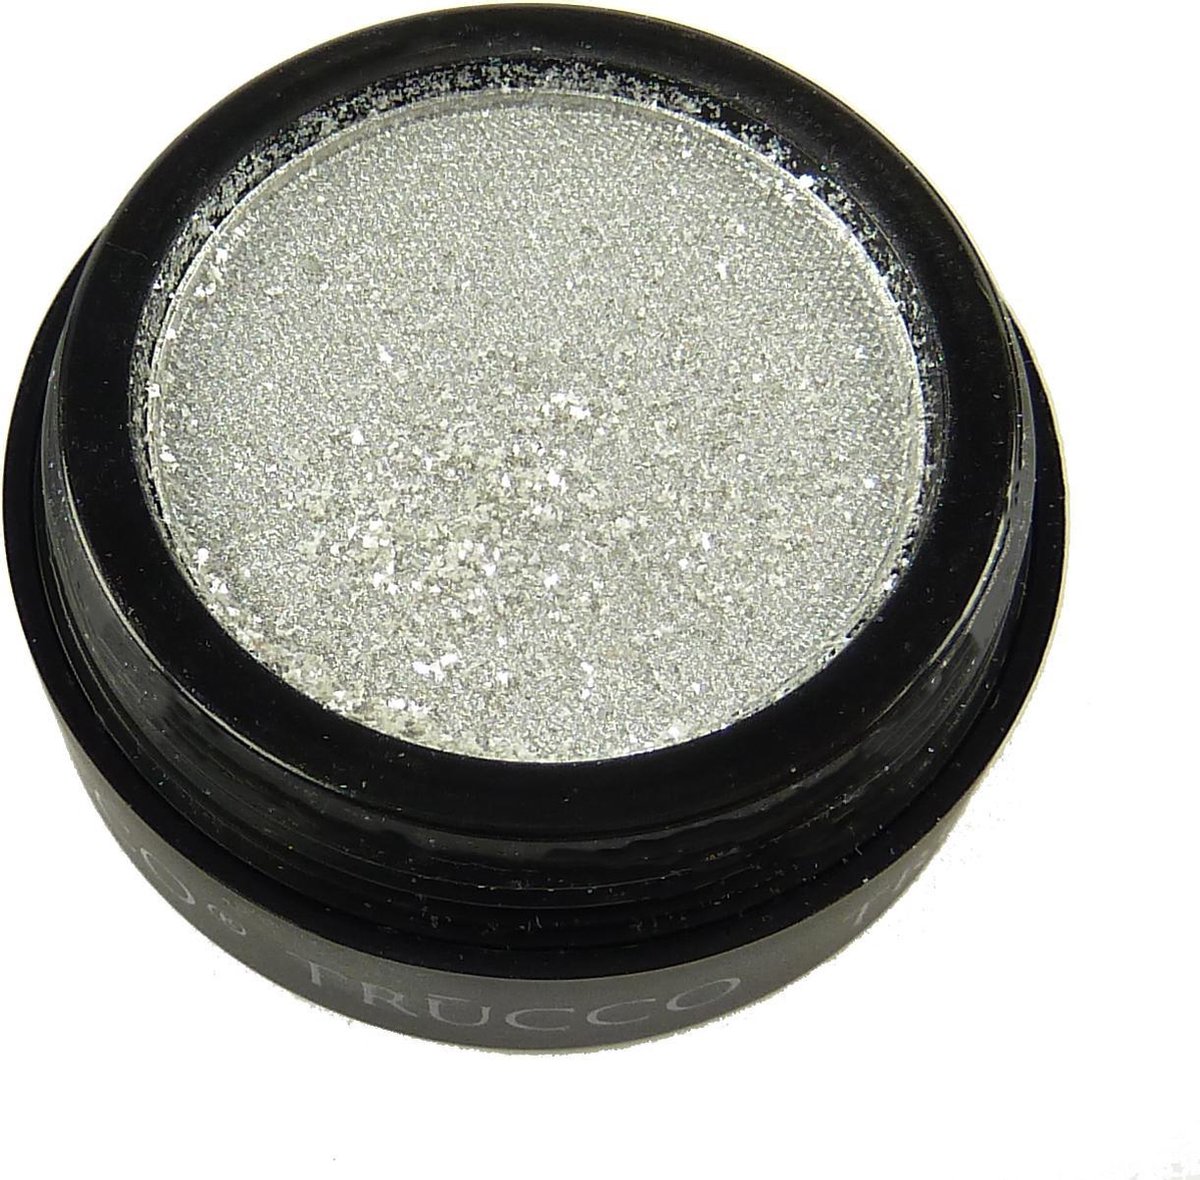 SEBASTIAN TRUCCO- VELVET ICE EYE COLOUR - Oogschaduw - Make-up - Cosmetica - Platinum